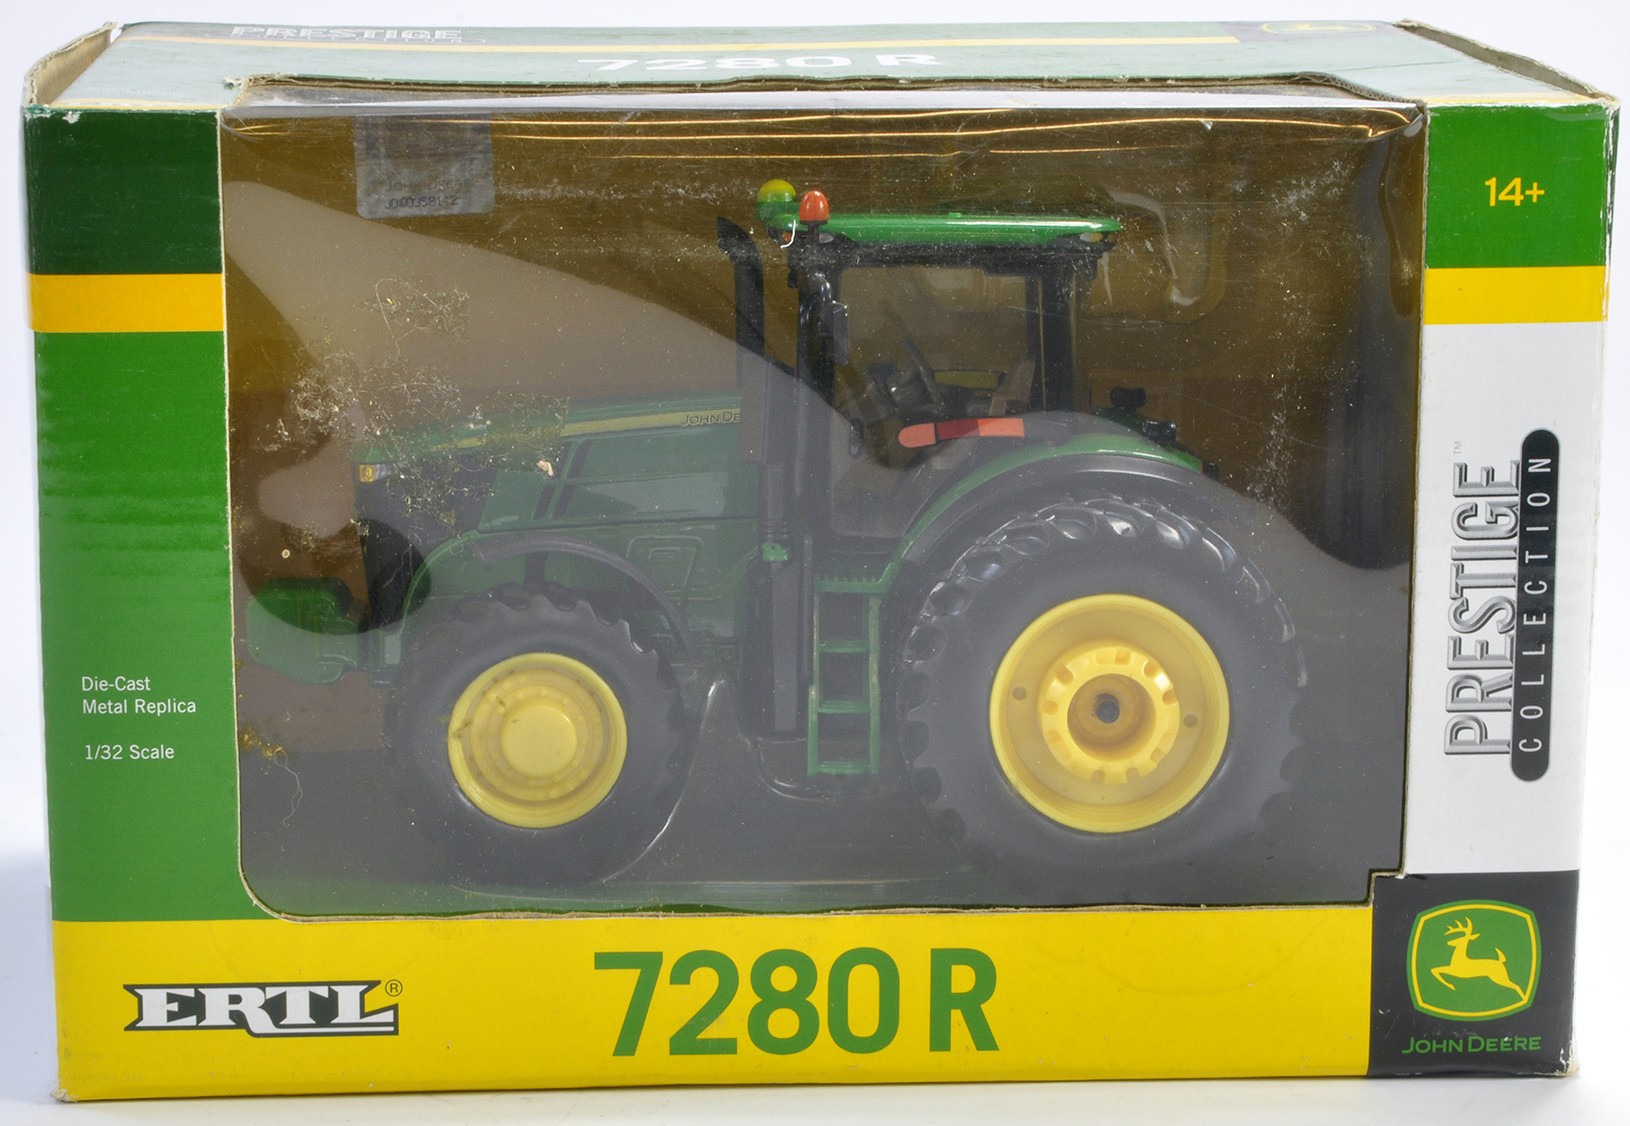 Ertl Prestige Collection (2011) 1/32 Farm Model issue comprising No. 45284 John Deere 7280R Tractor.